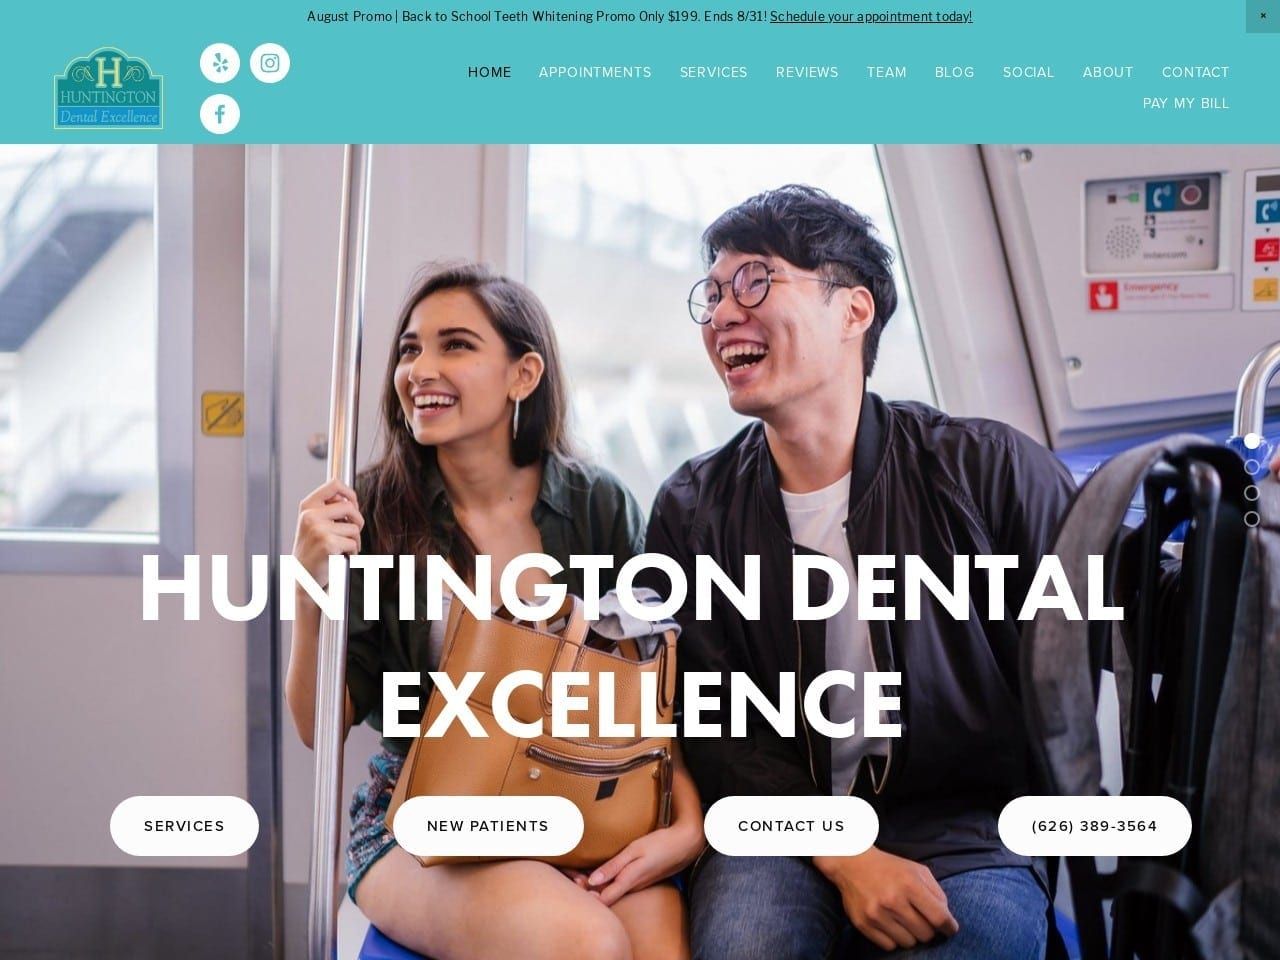 Huntington Dental Excellence Website Screenshot from southpasadenadentistry.com